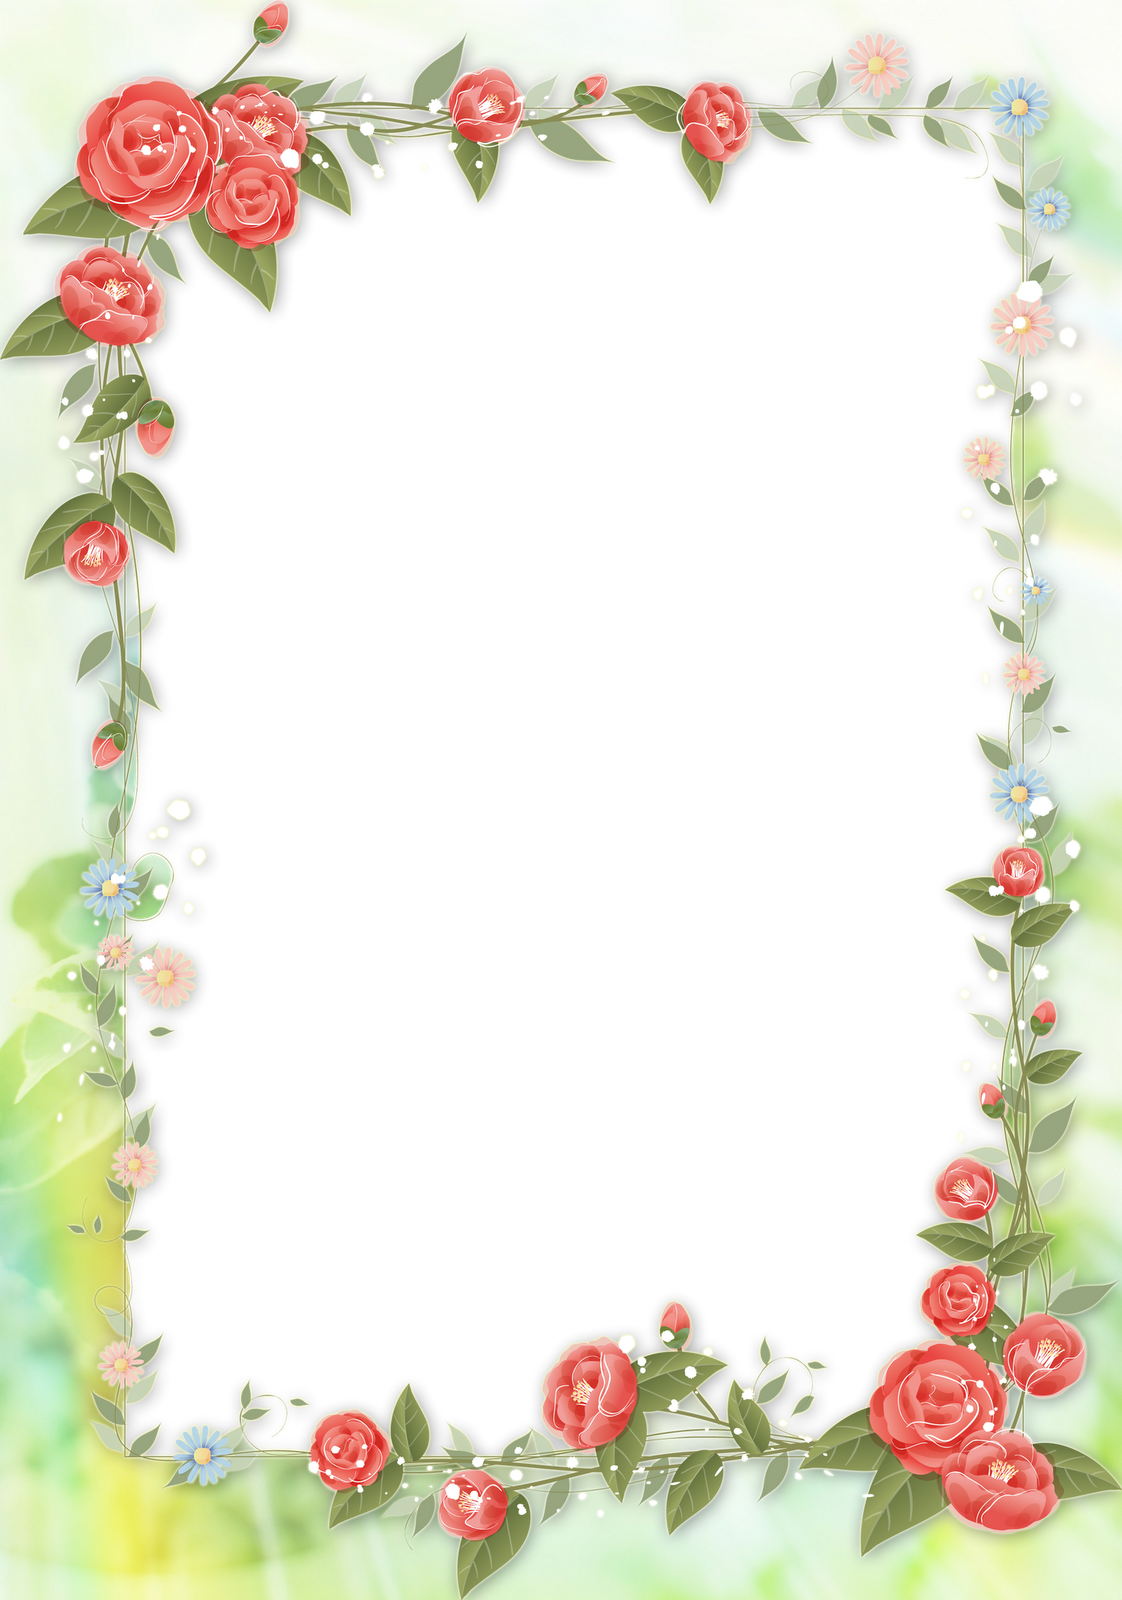 Http - //syedimranrocks - Blogspot - Com/ - Free Clipart Pink Flower Border Frame (1122x1600)